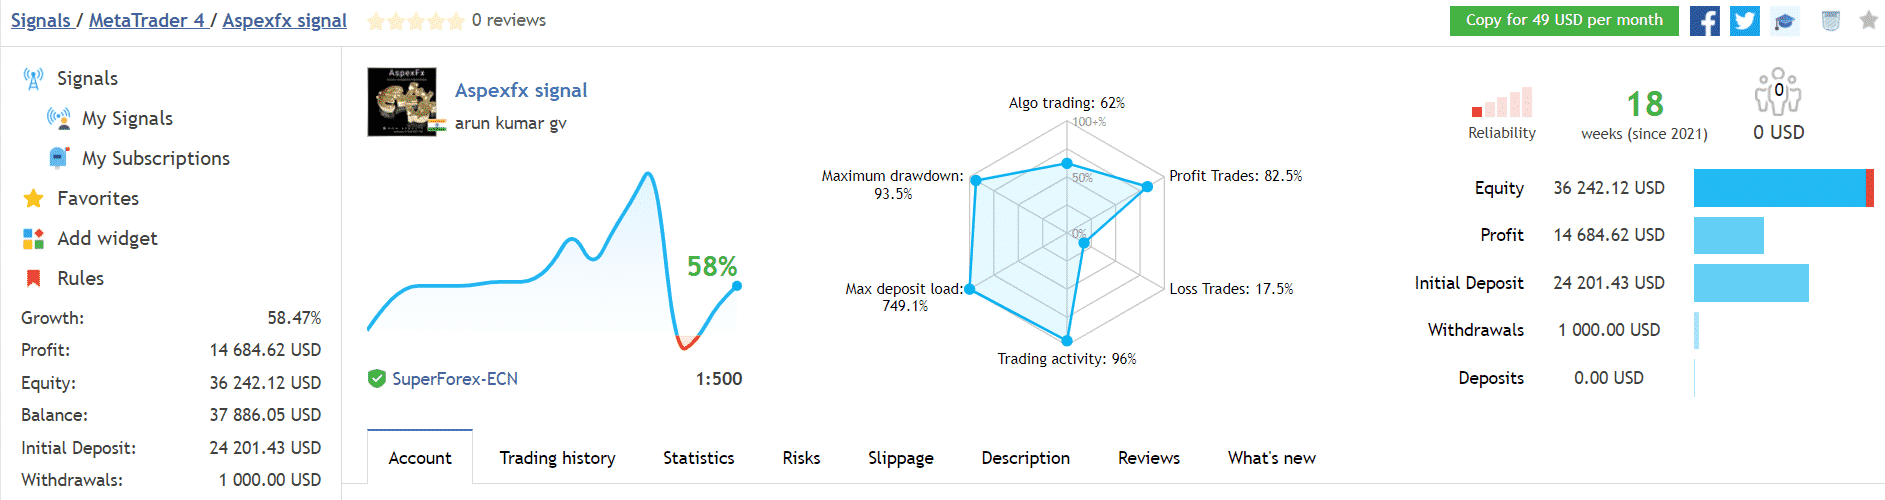 AspexFX trading results on MQL5